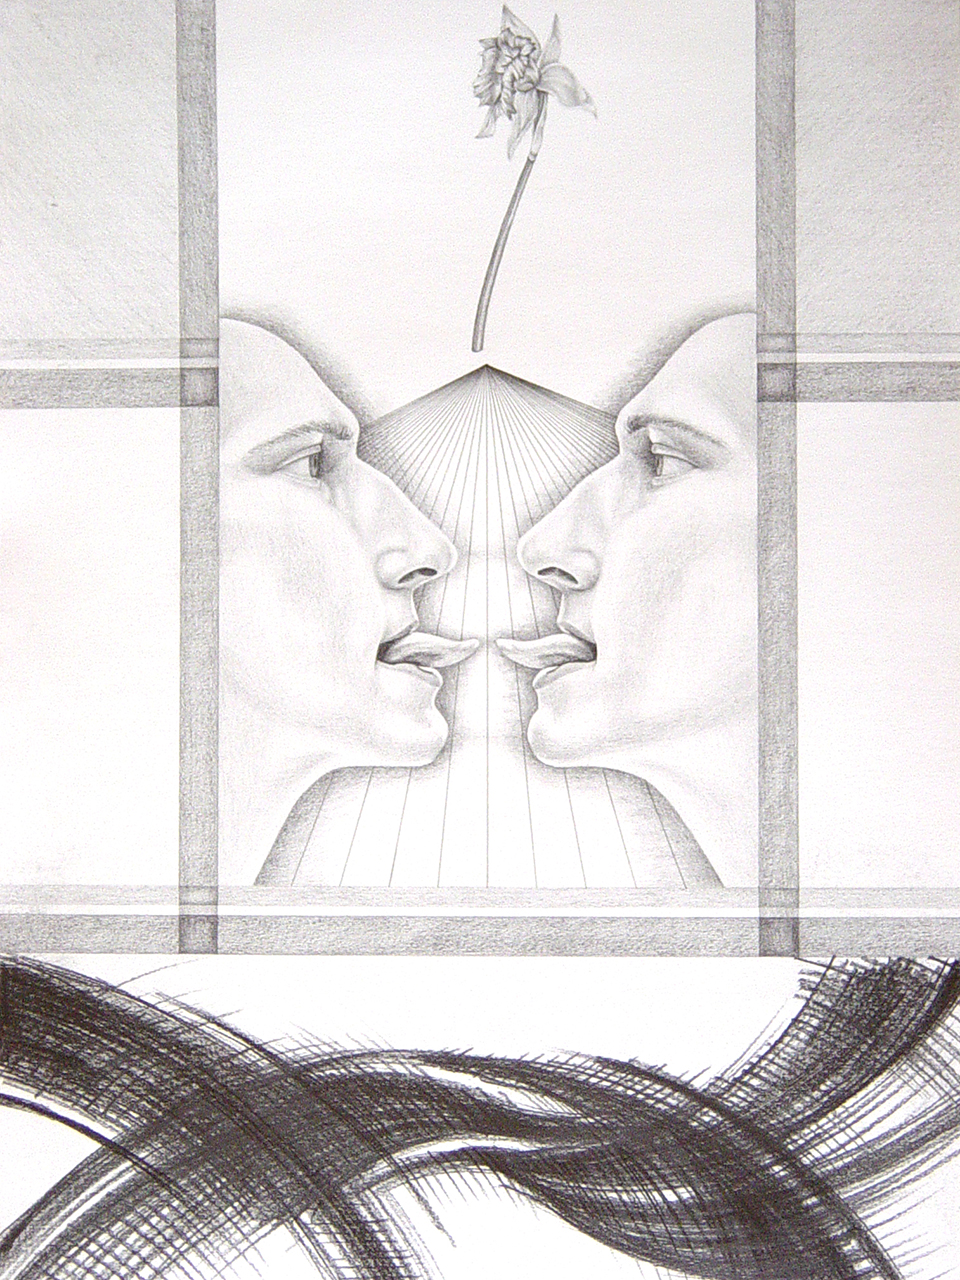 technique: pencil on paper dimension: 70 x 50 cm year: 1995